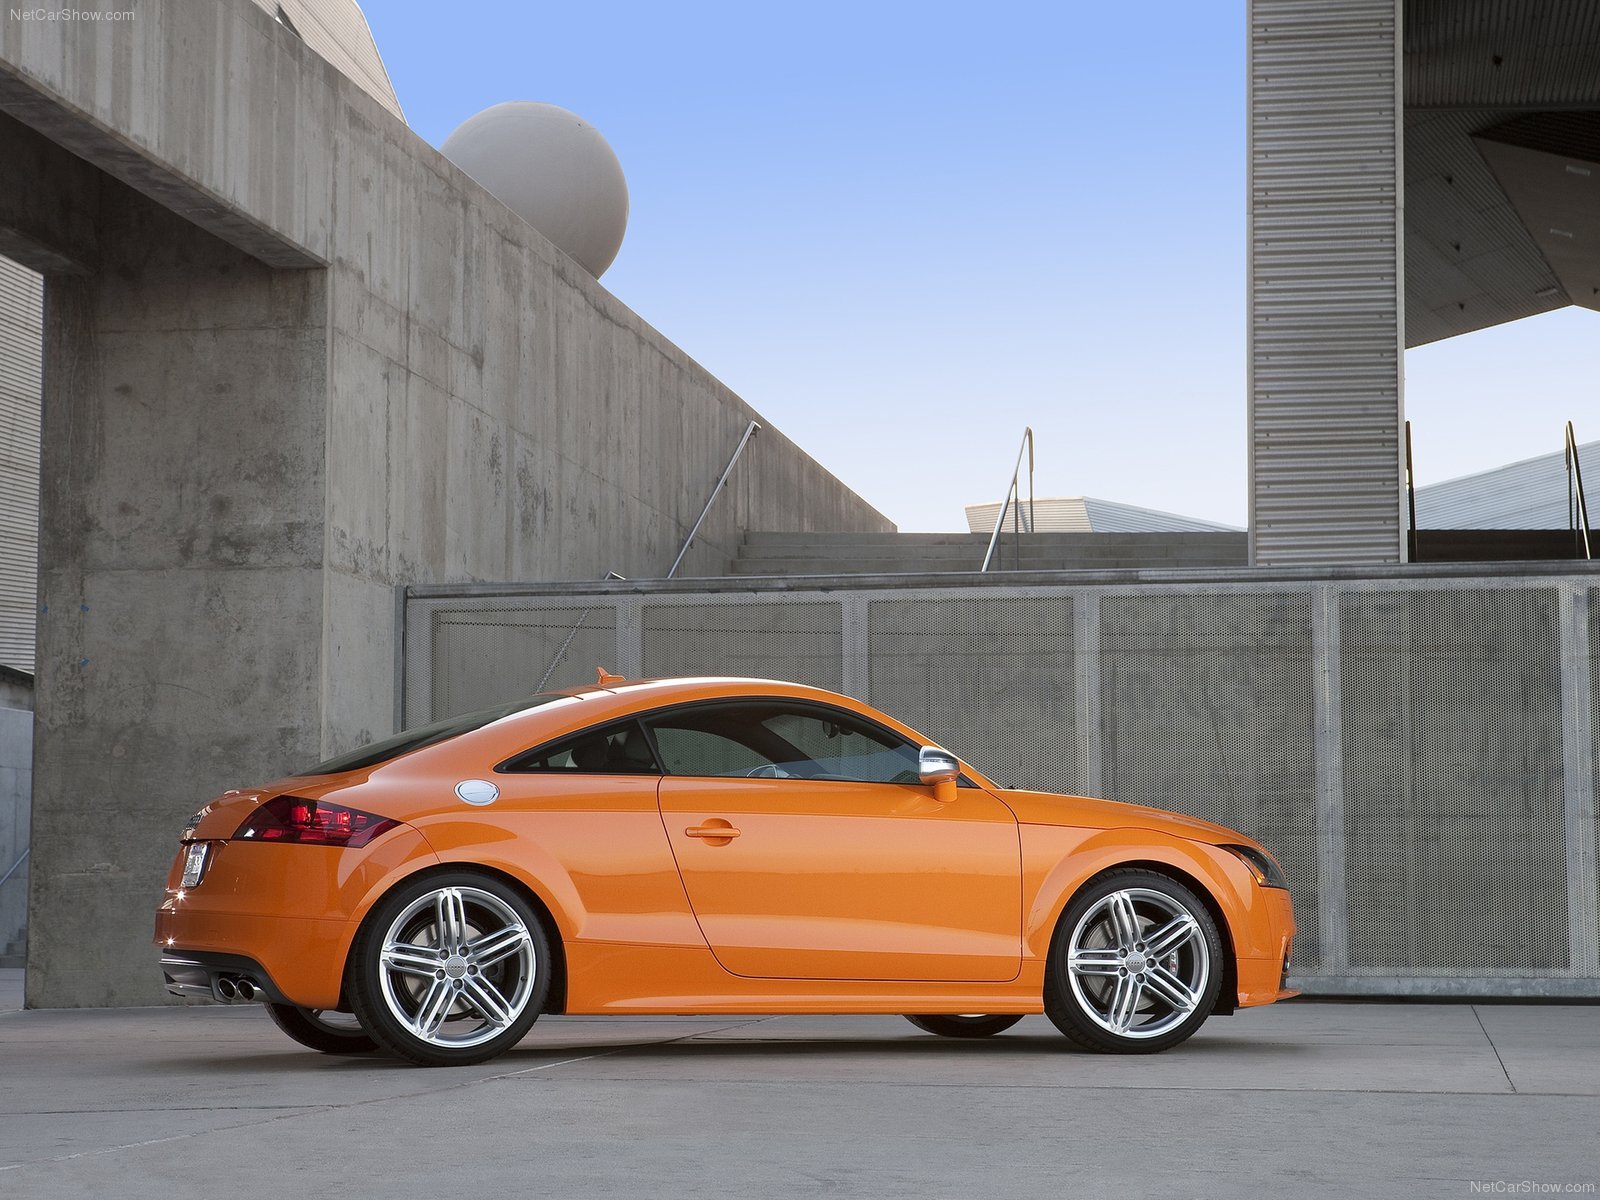 2011, Audi, Coupe, Tts Wallpaper